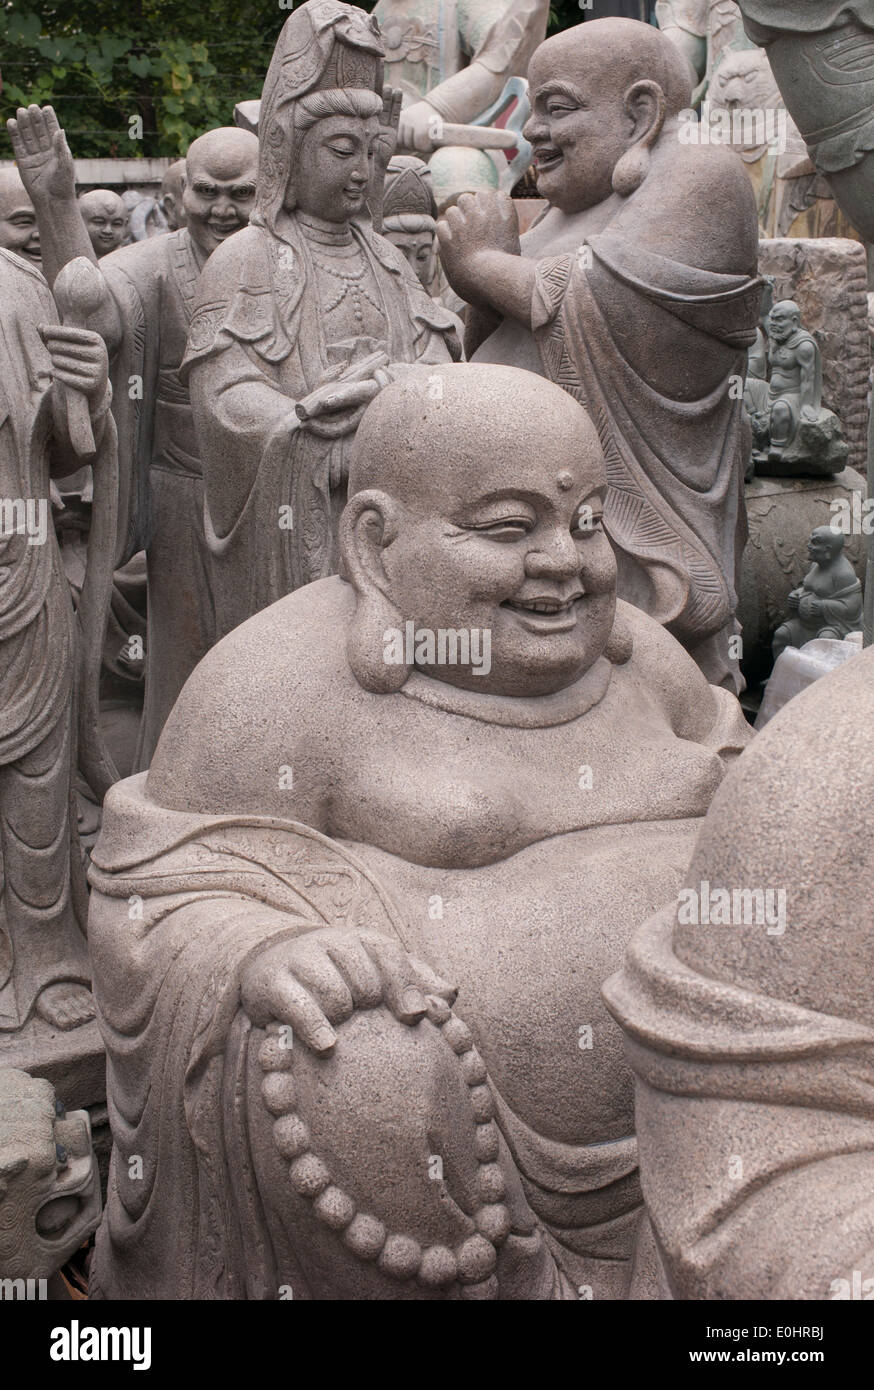 Align Your Life: The Laughing Buddha - News | Khaleej Times